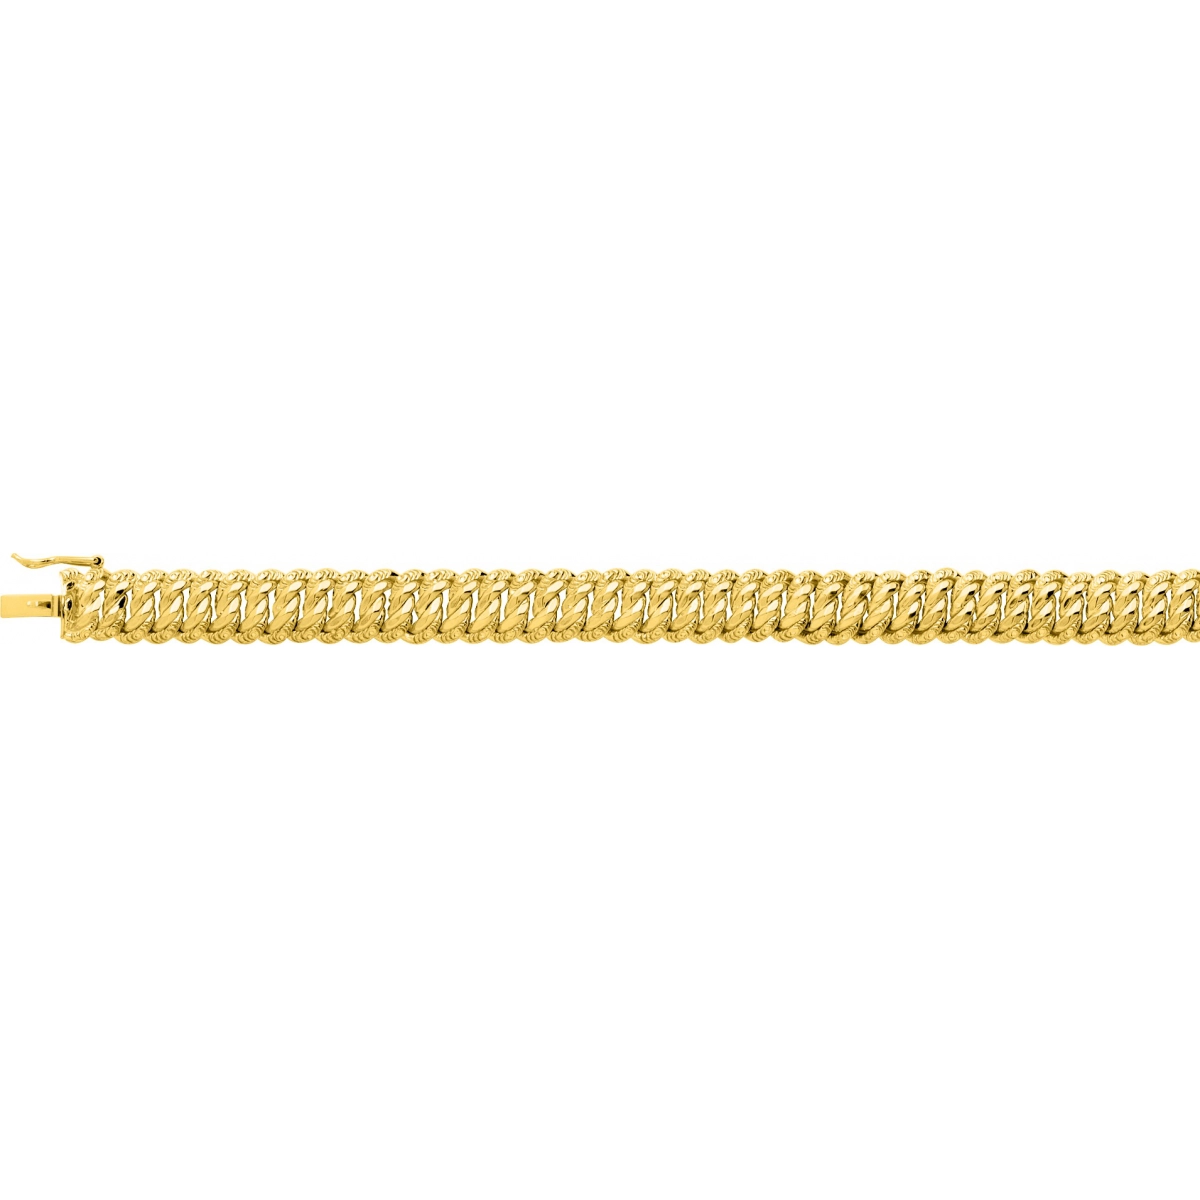 Bracelet gold plated Brass - Size: 19  Lua Blanca  101441B.19